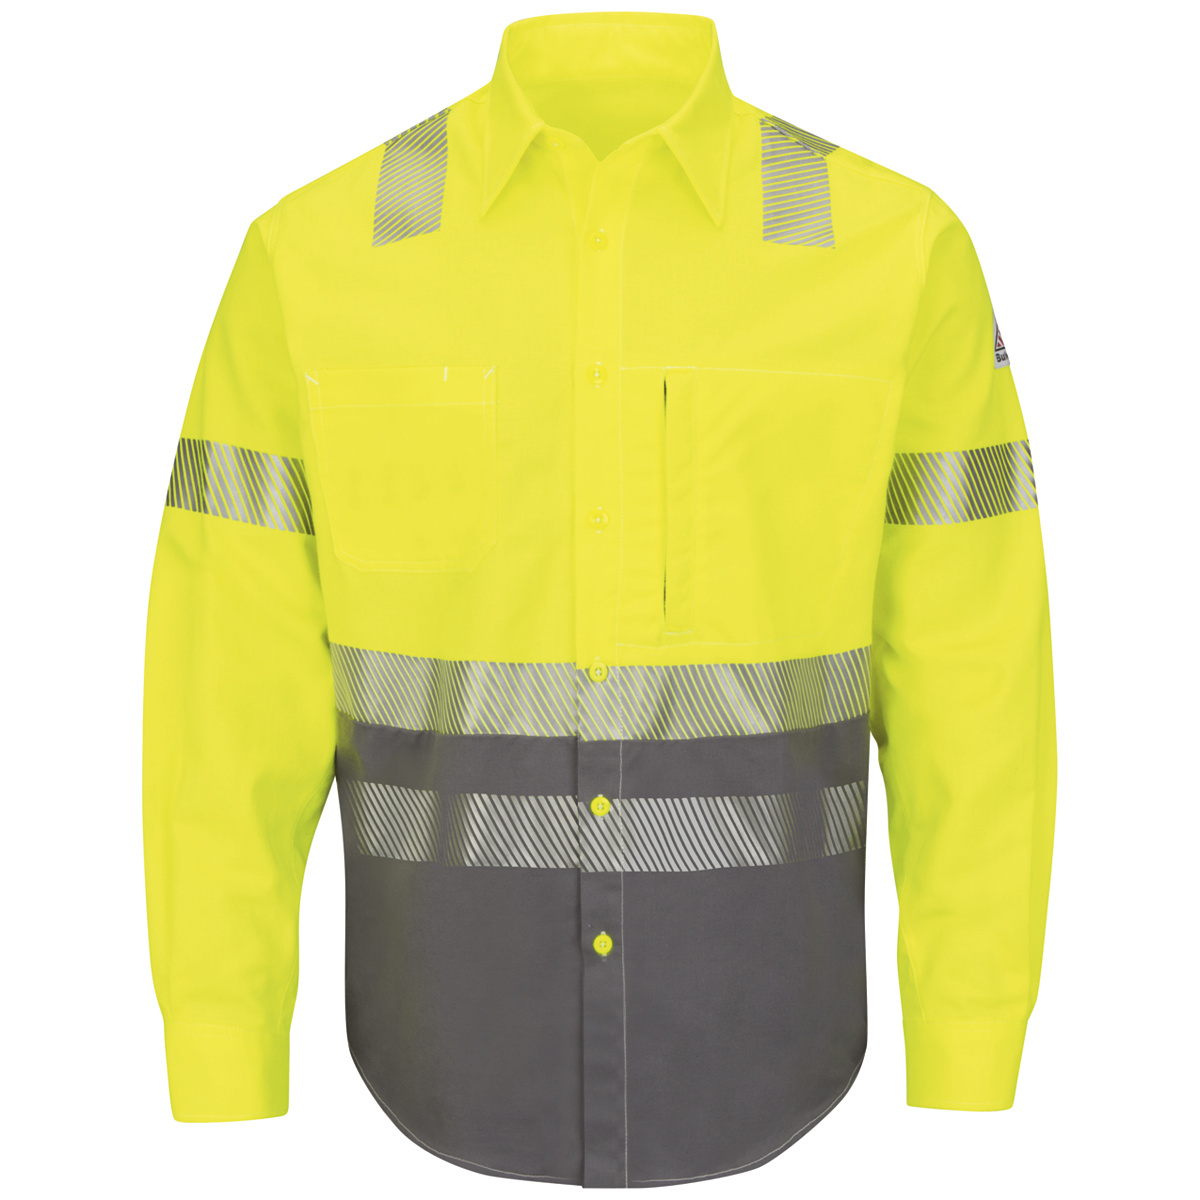 Bulwark® 2X Regular Hi-Viz Yellow And Gray Westex Ultrasoft®/Cotton/Nylon Hi-Visibility Flame Resistant Uniform Shirt With Butto